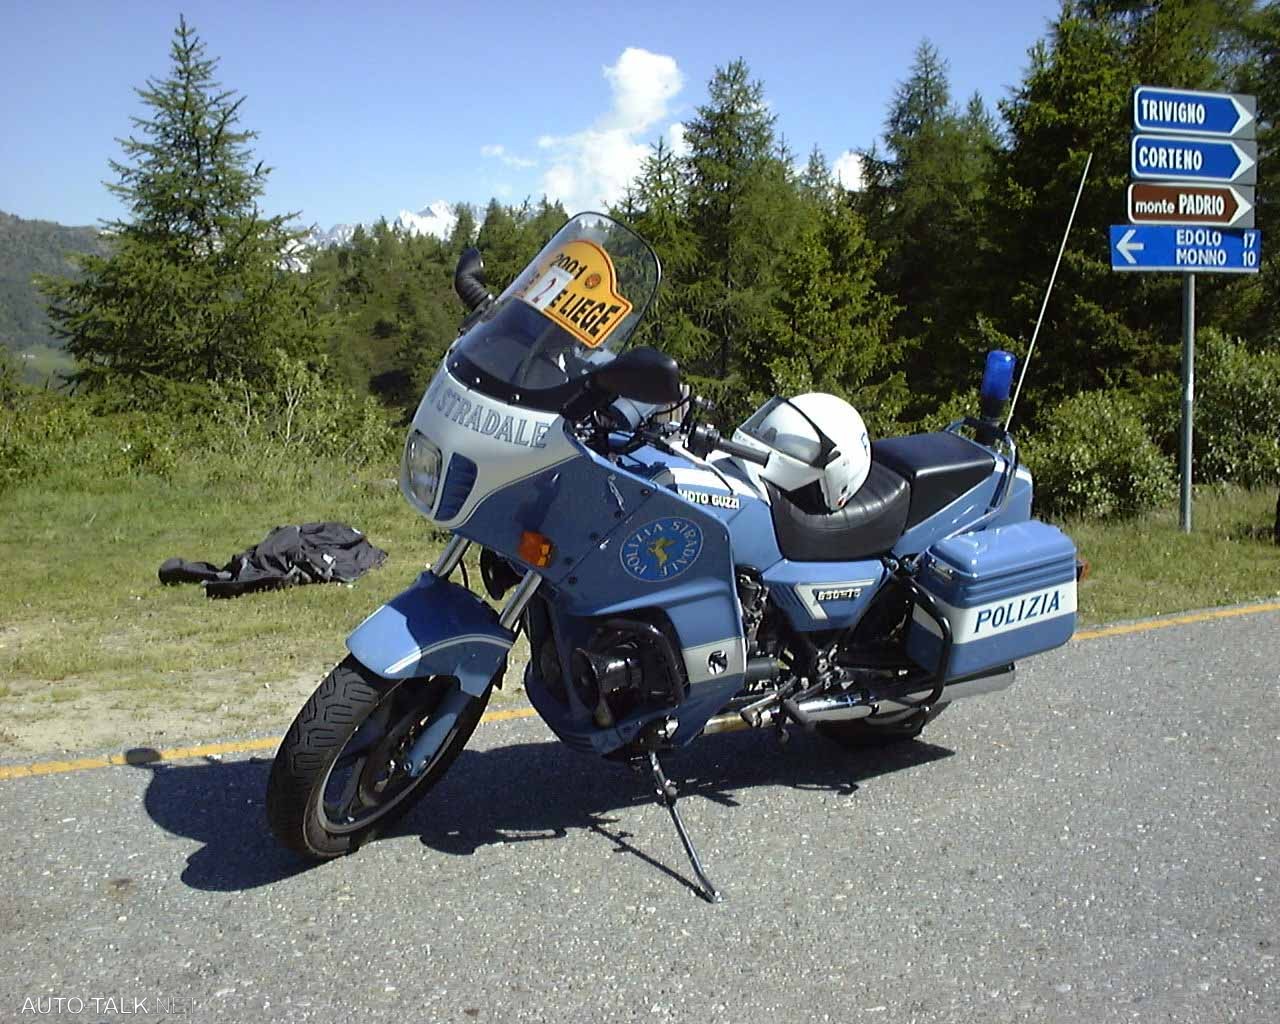 Italian Police Motorcycle